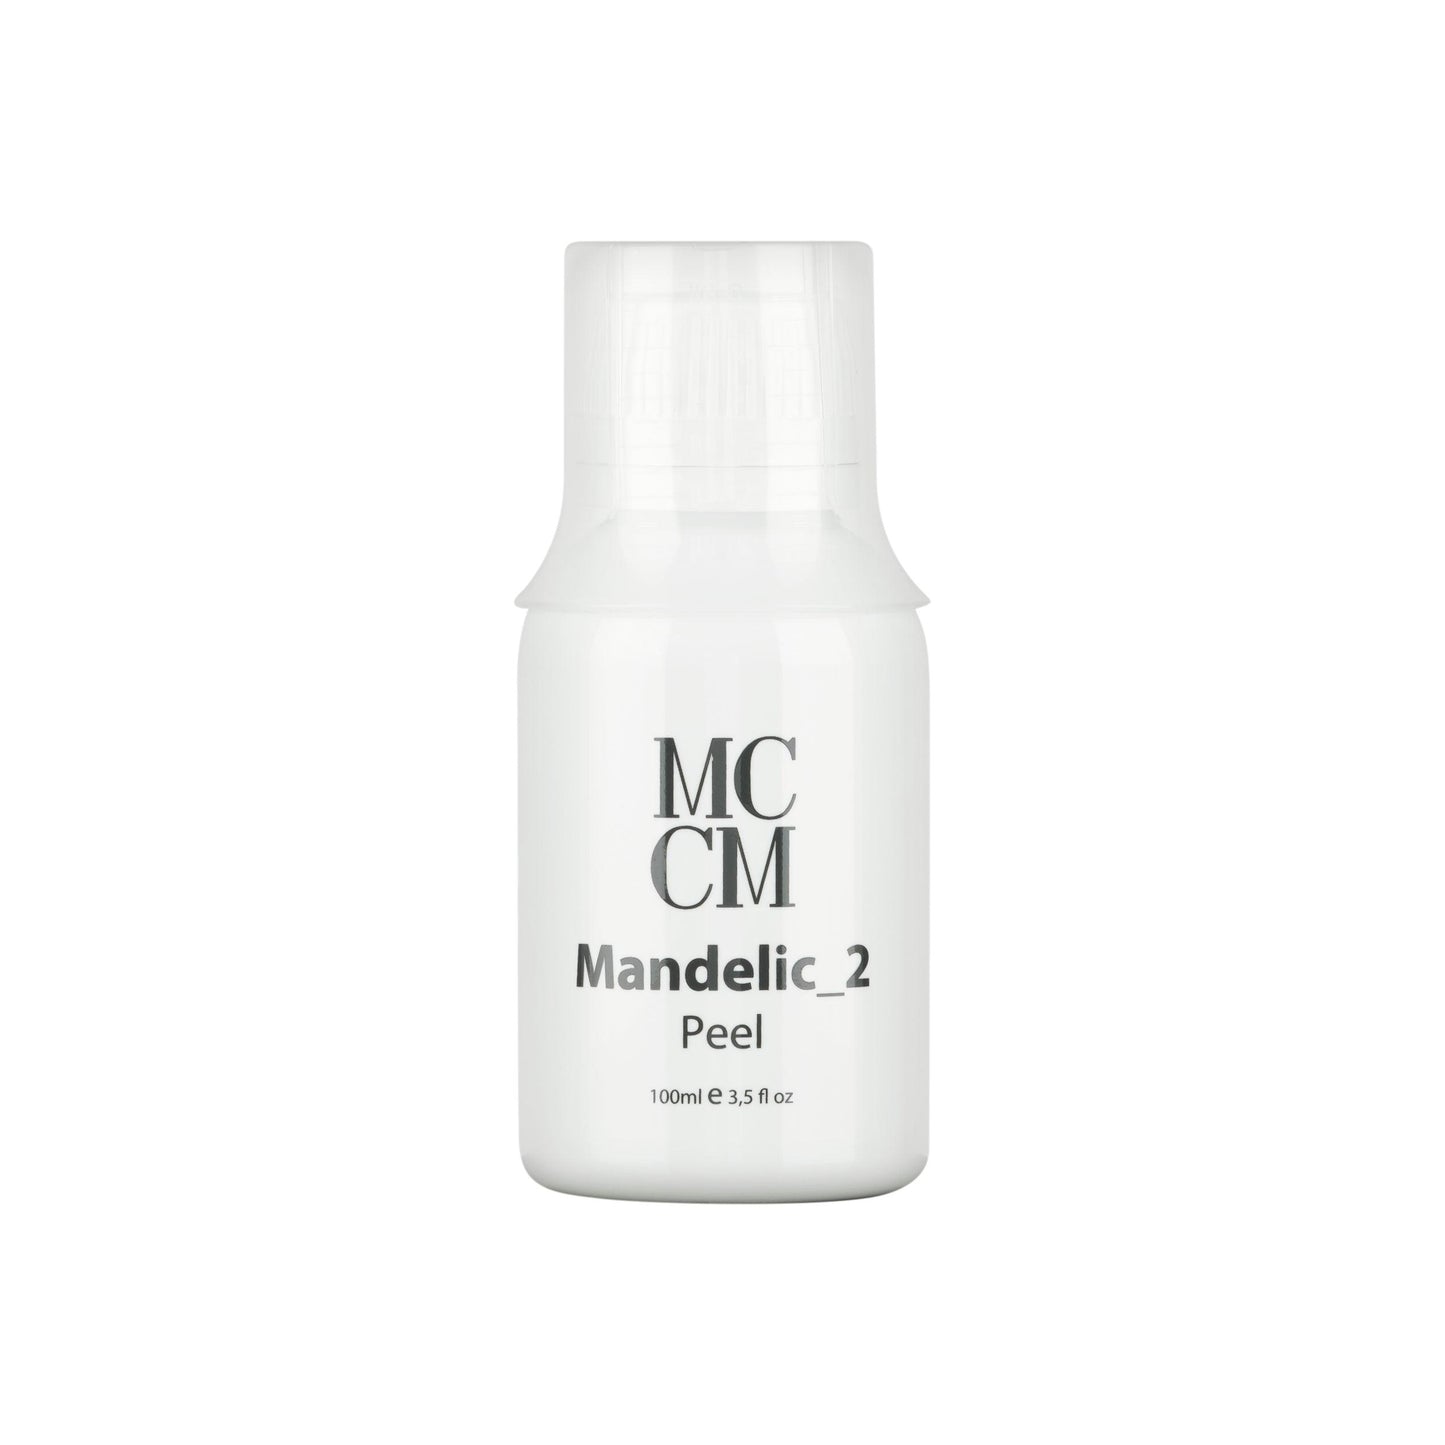 Mandelic_2 Peel - MCCM Medical Cosmetics